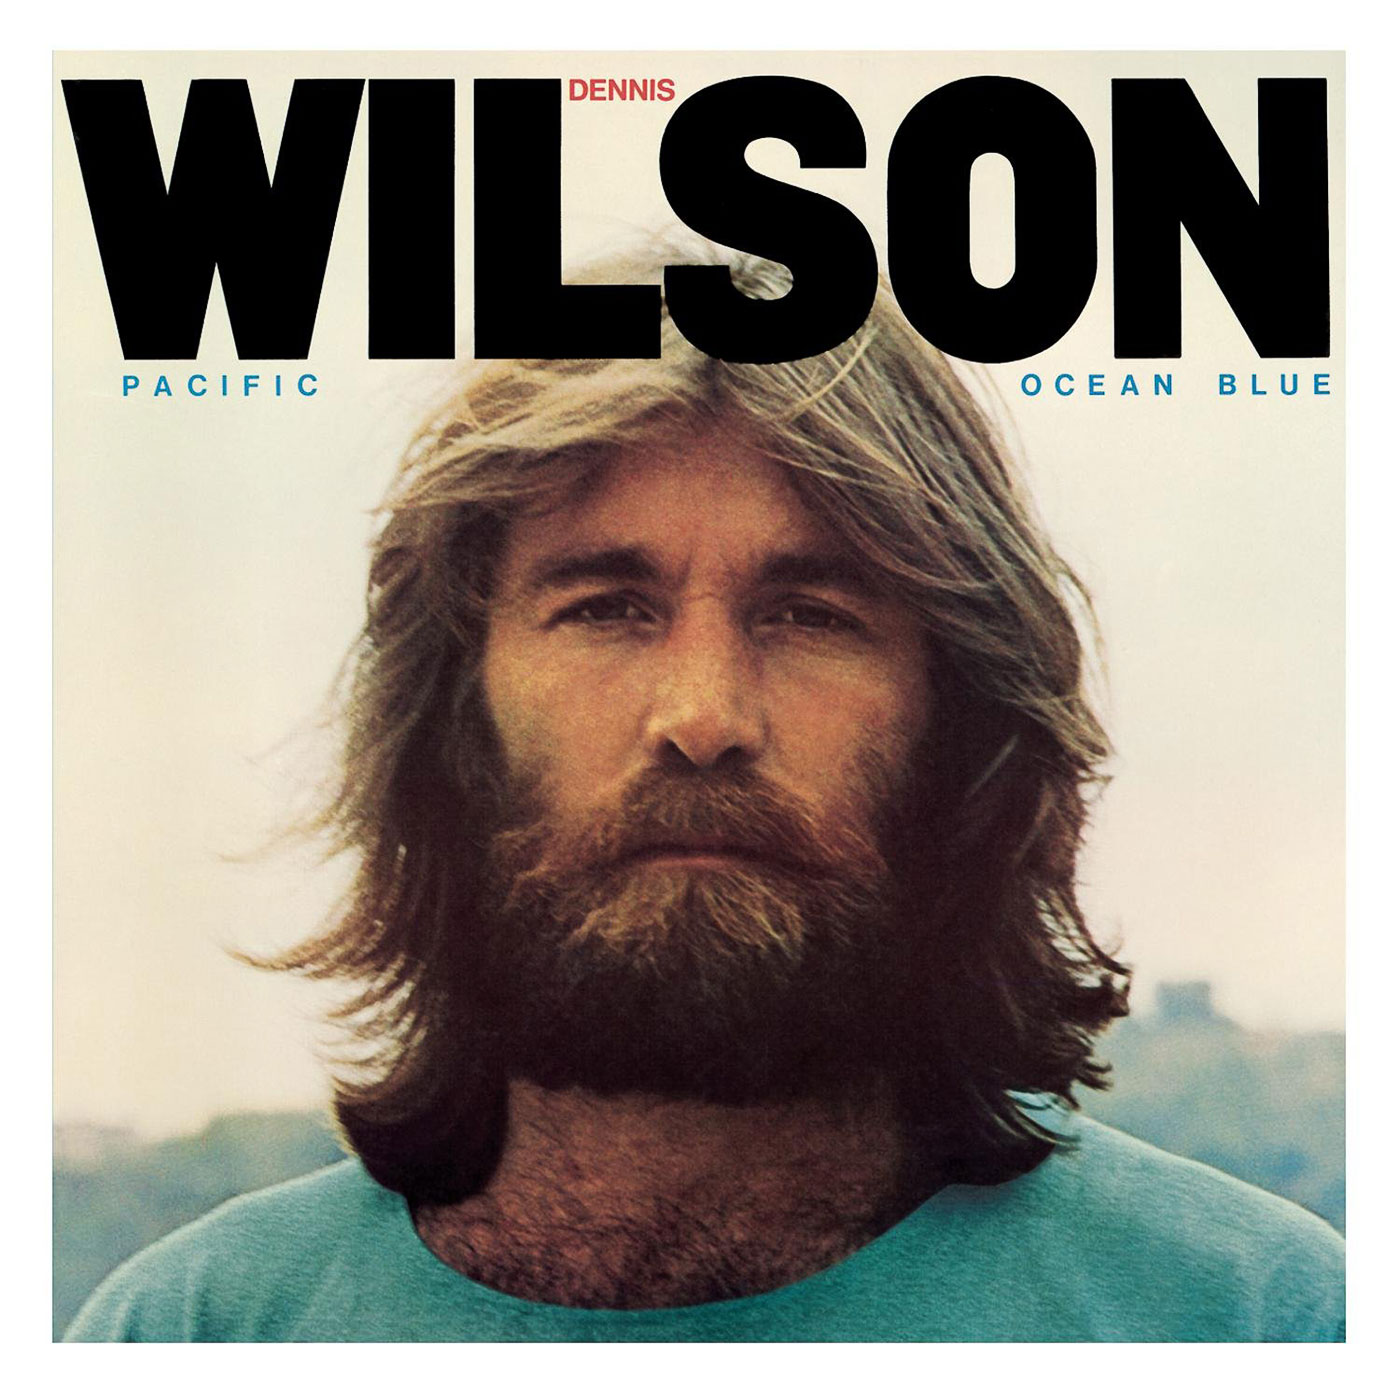 385 Dennis Wilson – Pacific Ocean Blue